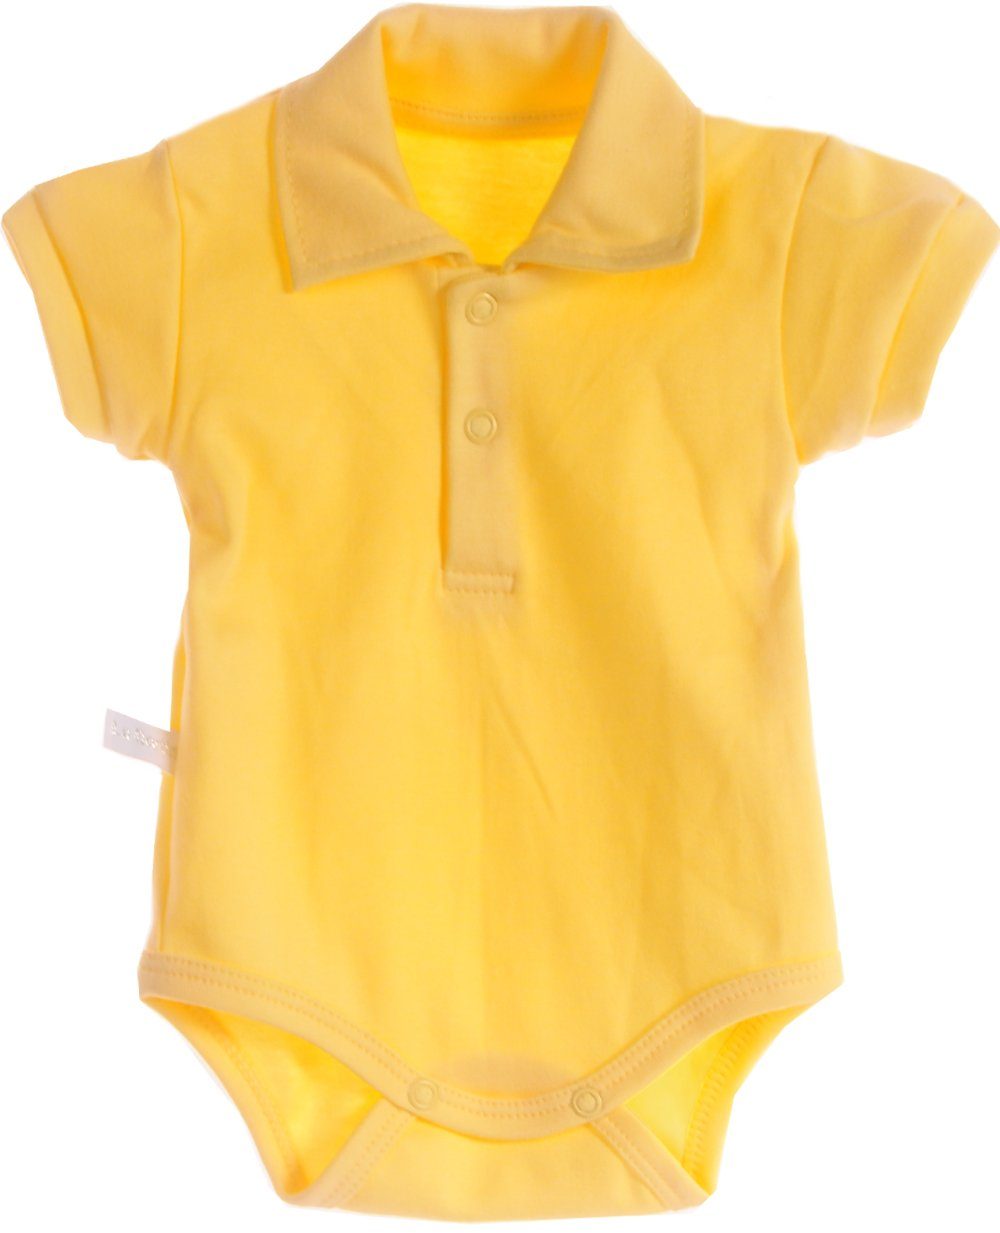 La Bortini Body Body kurzärmlig festlich in gelb für Baby 44 50 56 62 68 74 80 86 92